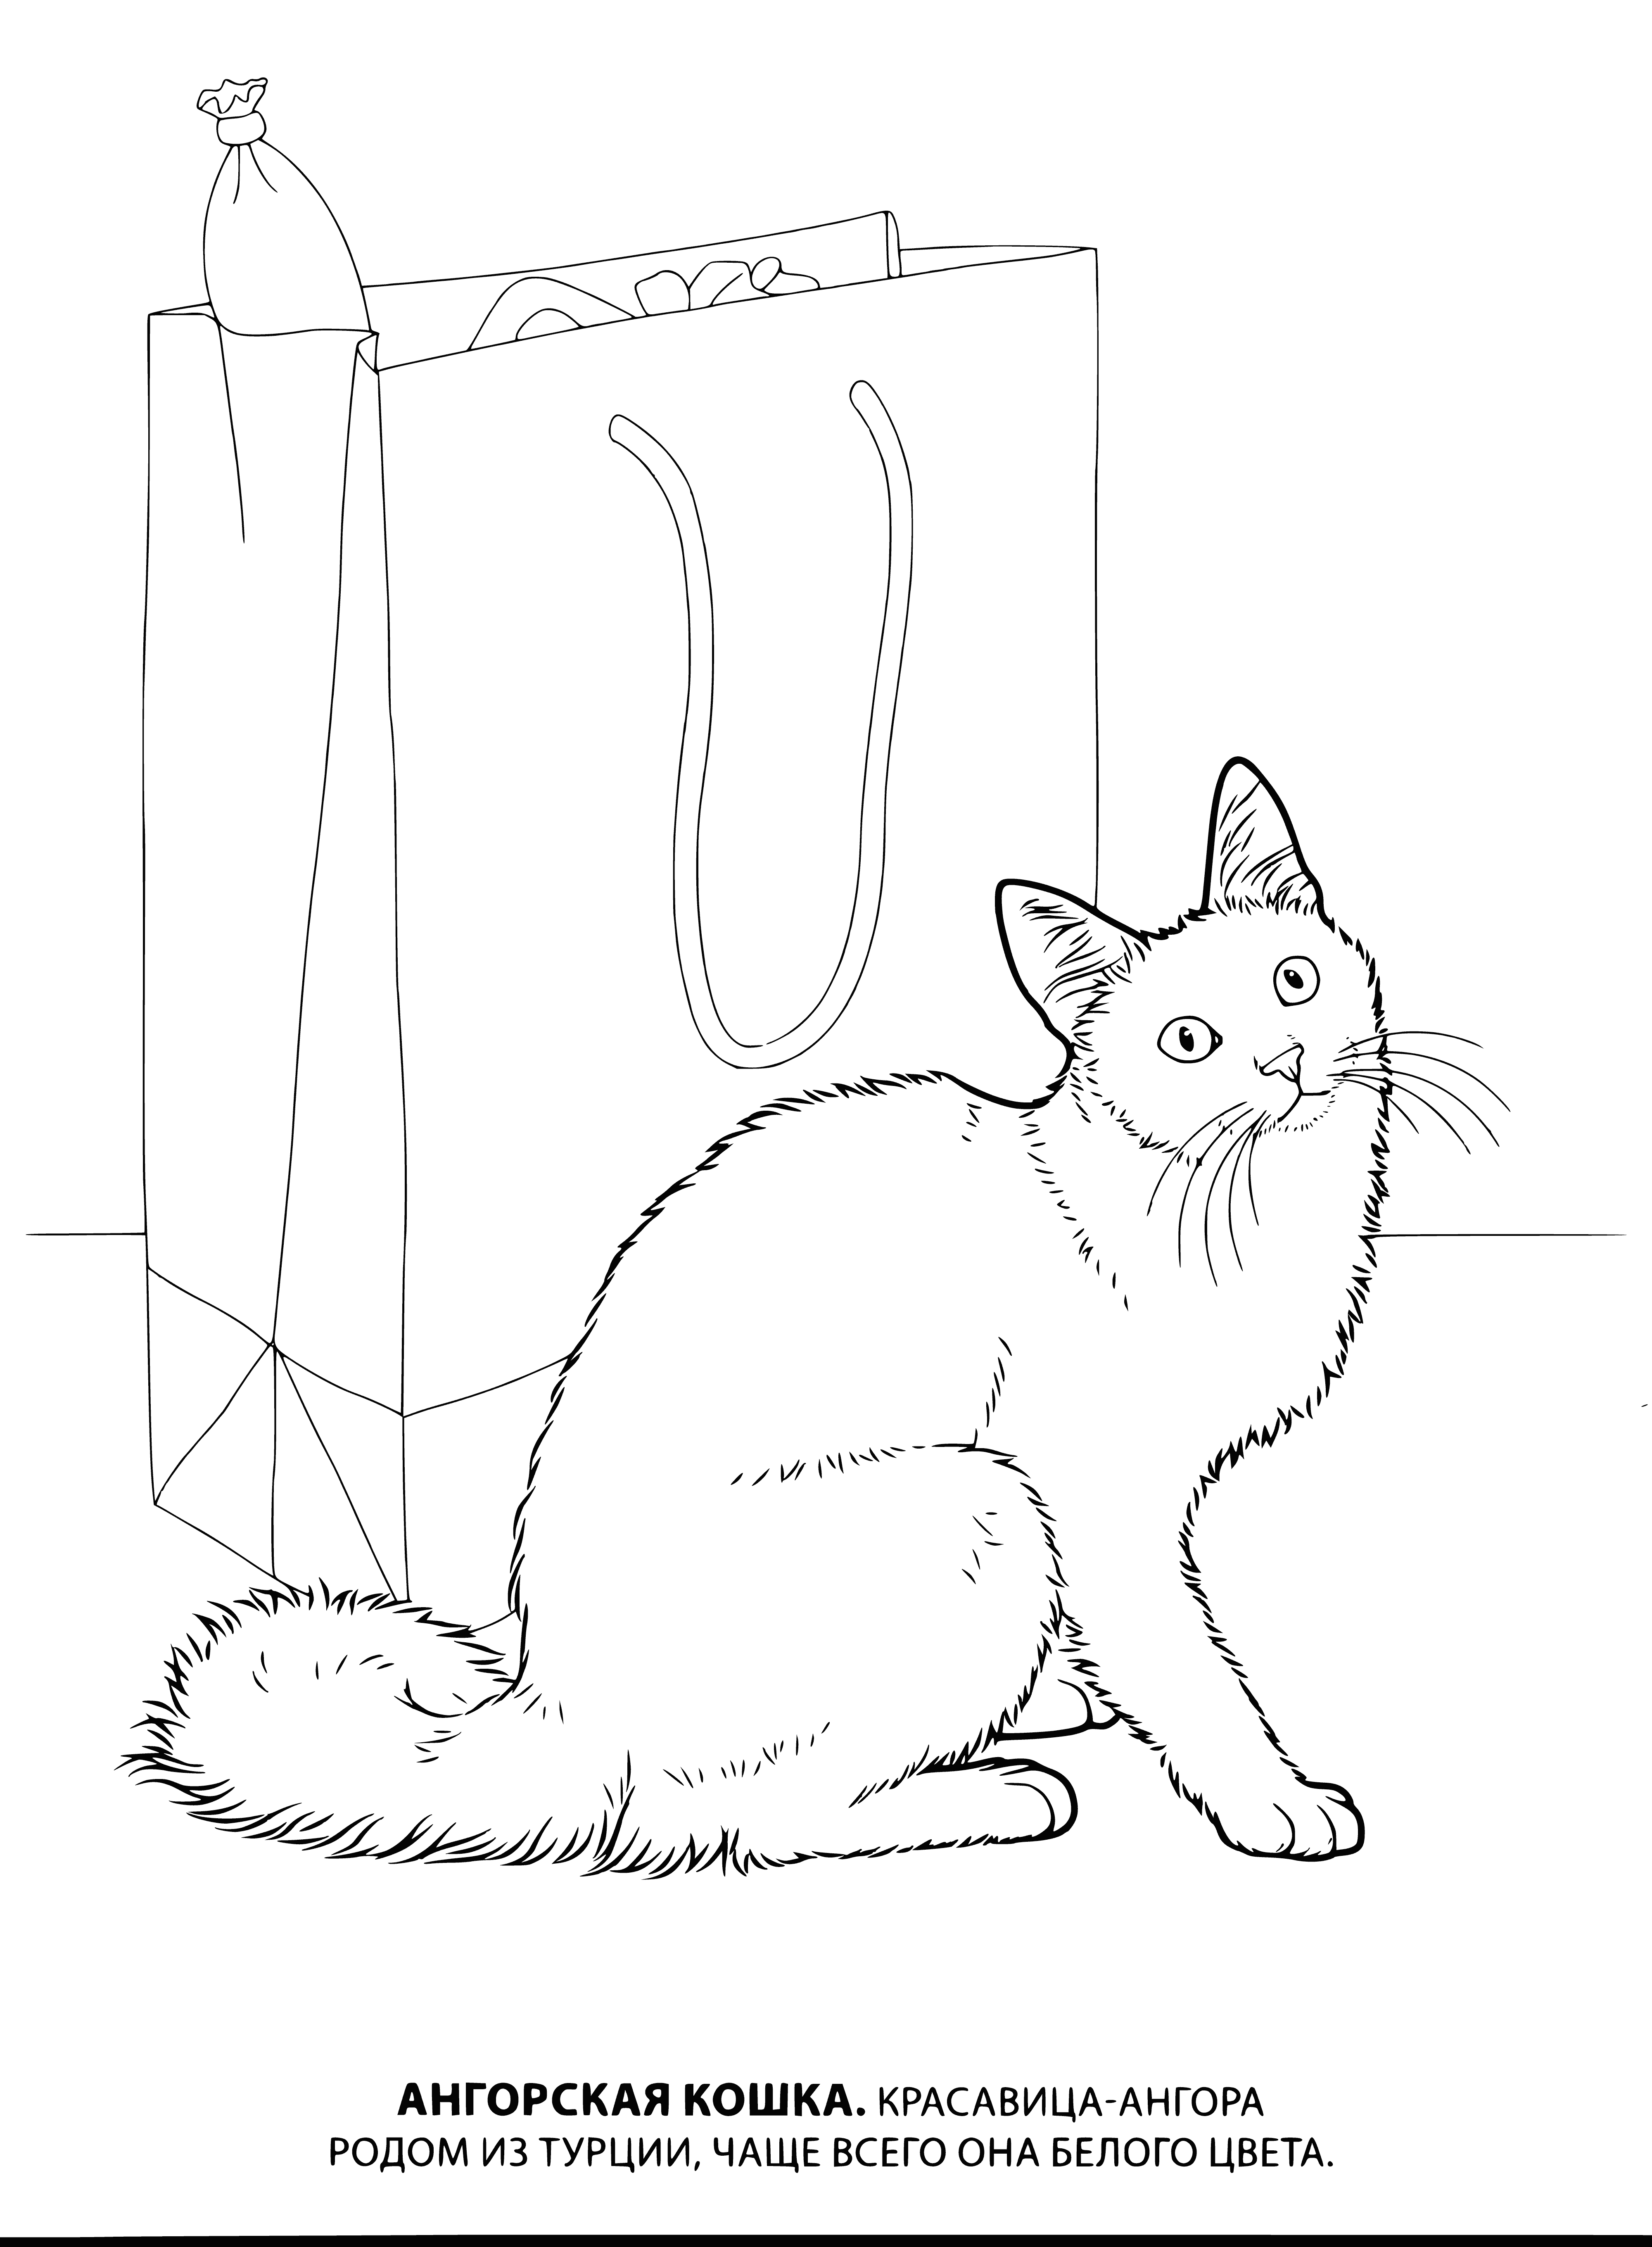 Angora cat coloring page